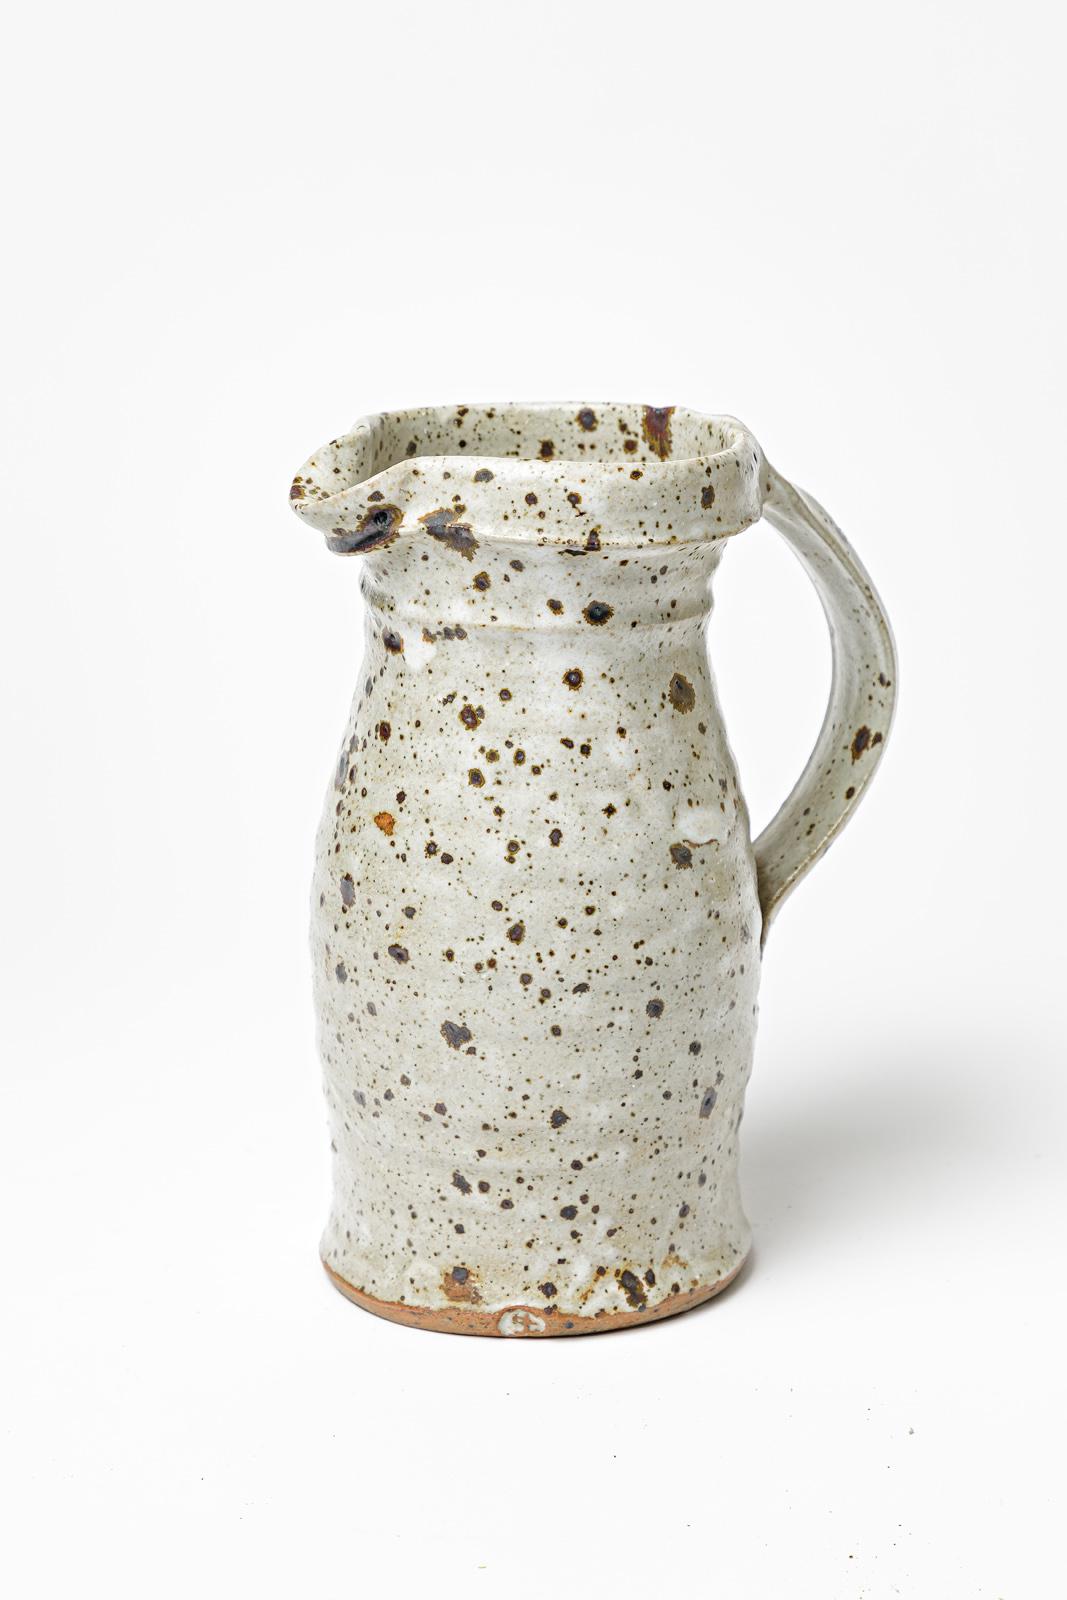 Gustave Tiffoche

20th century grey stoneware ceramic pitcher

Unique handmade piece

Signed 

Height 20 cm
Large 15 cm